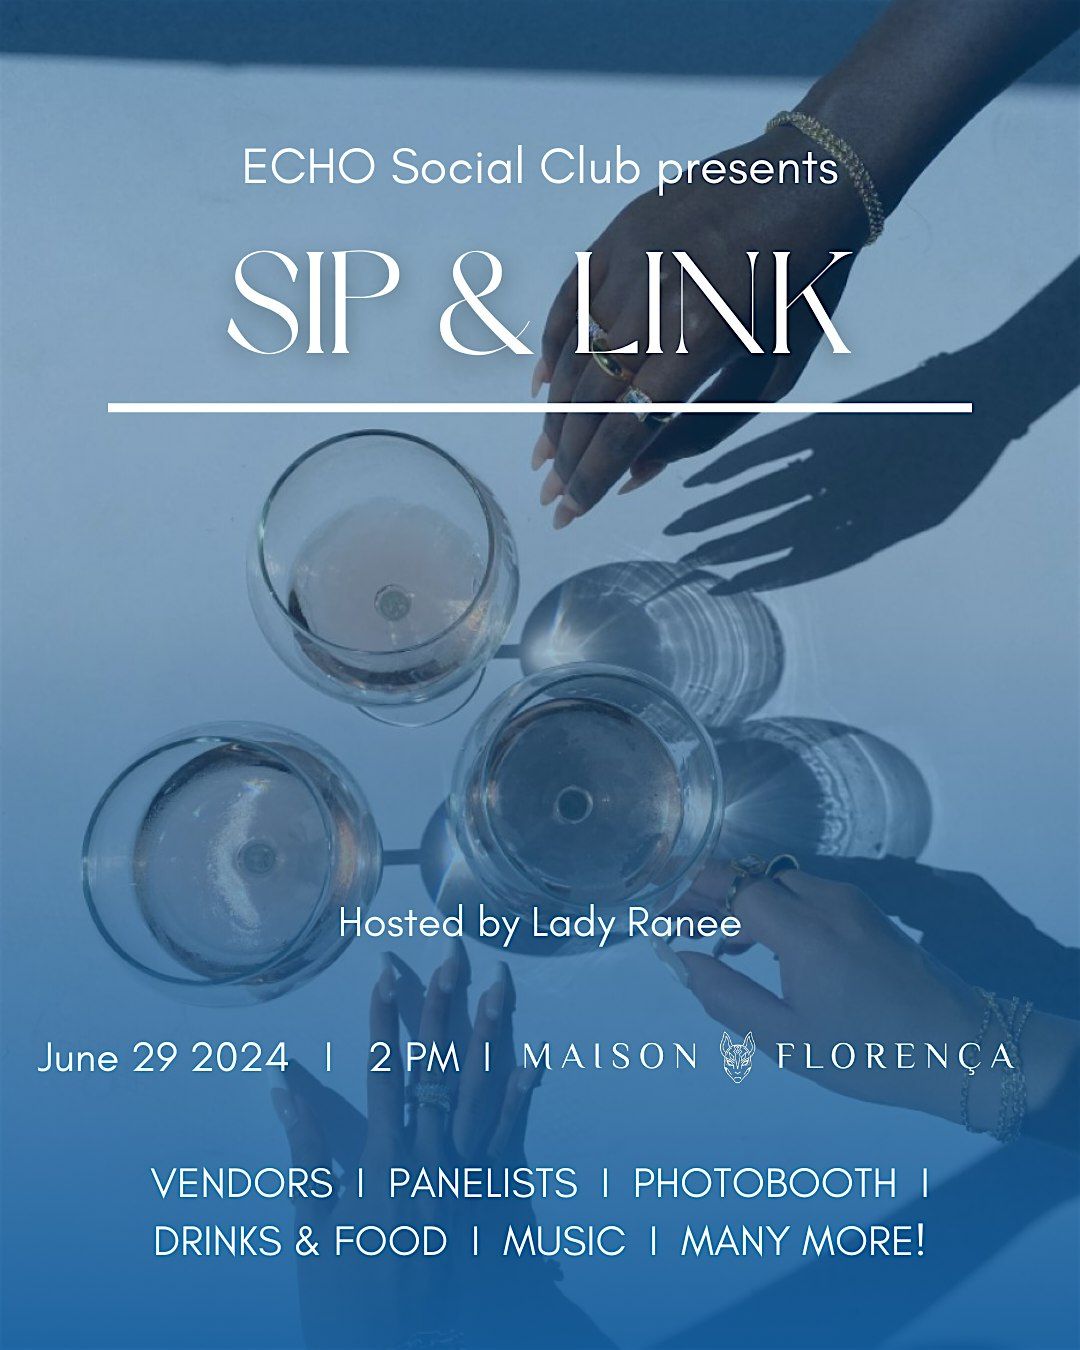 SIP & LINK presented by ECHO Social Club